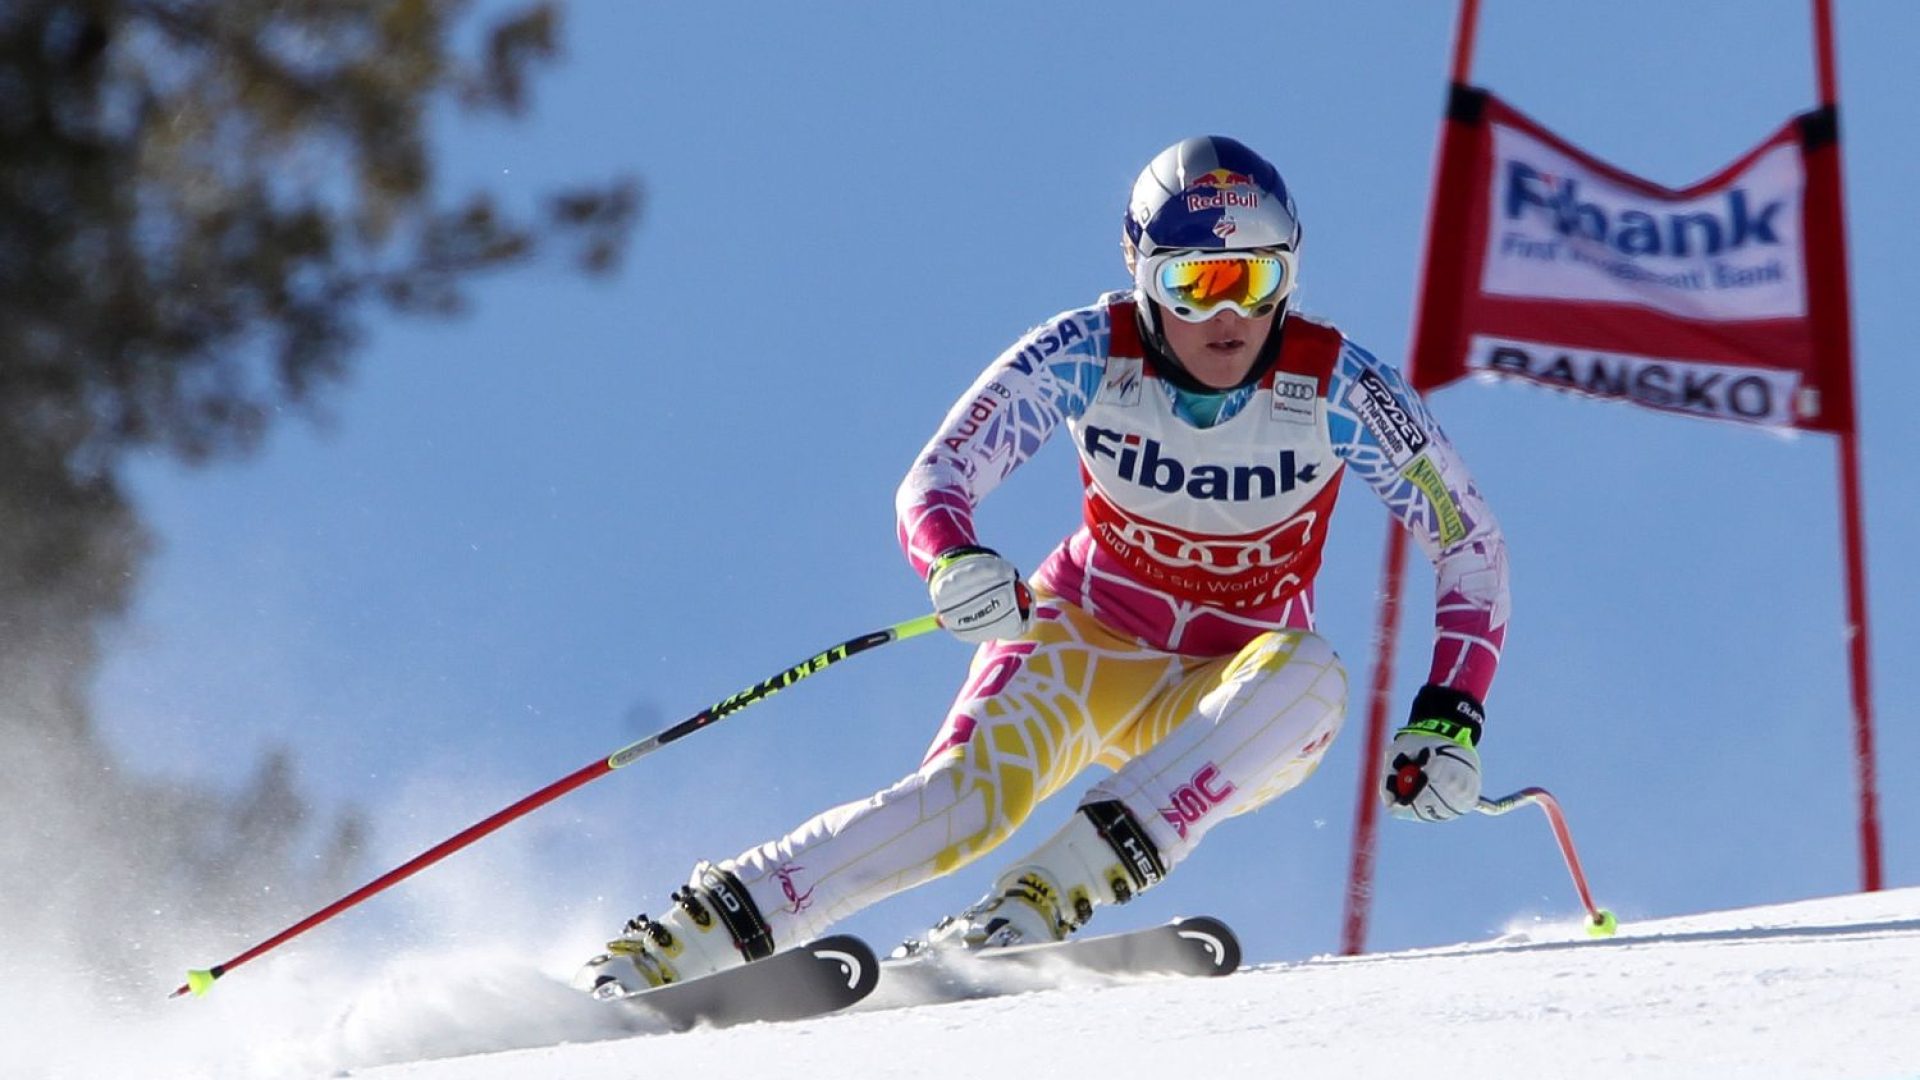 Ski World Cup 2011-2012 - Bansko (BUL) - 24-02-2012 - Training 2 - Lindsey Vonn (USA)
(Pentaphoto)